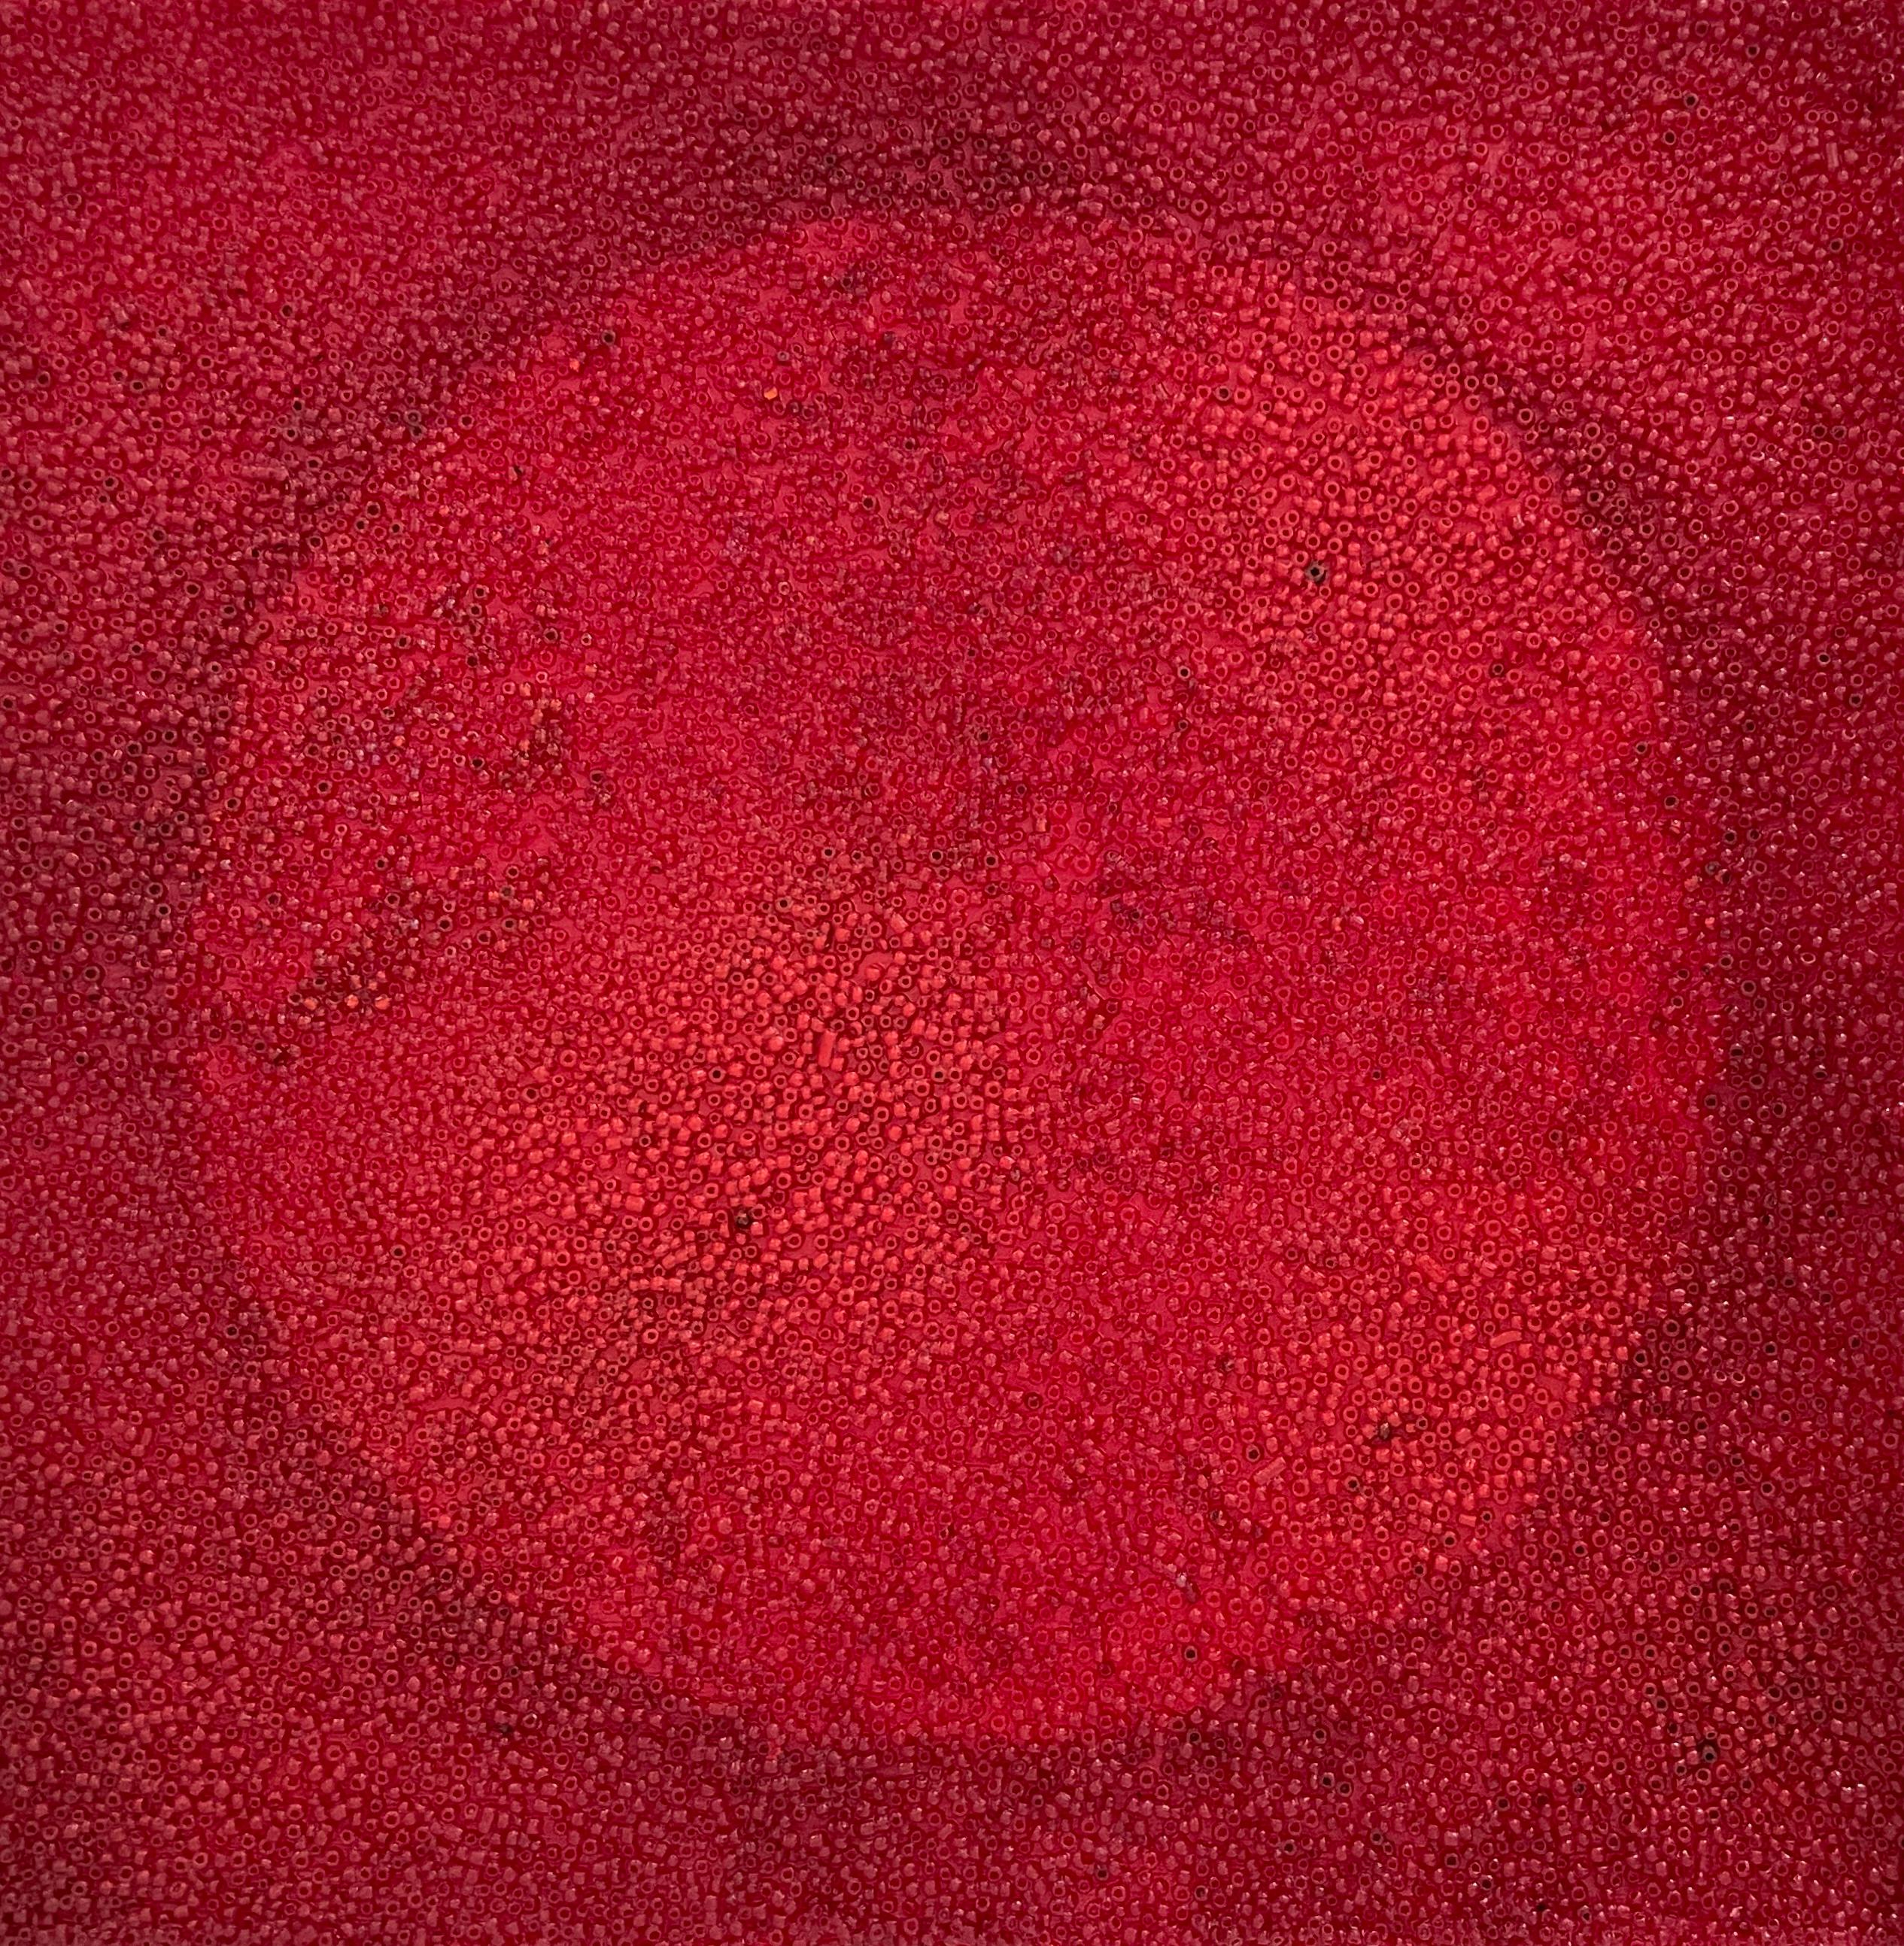 Antonio Puri Abstract Painting - Tantra 48: minimalist abstract spiritual mandala sculpture painting, red circles